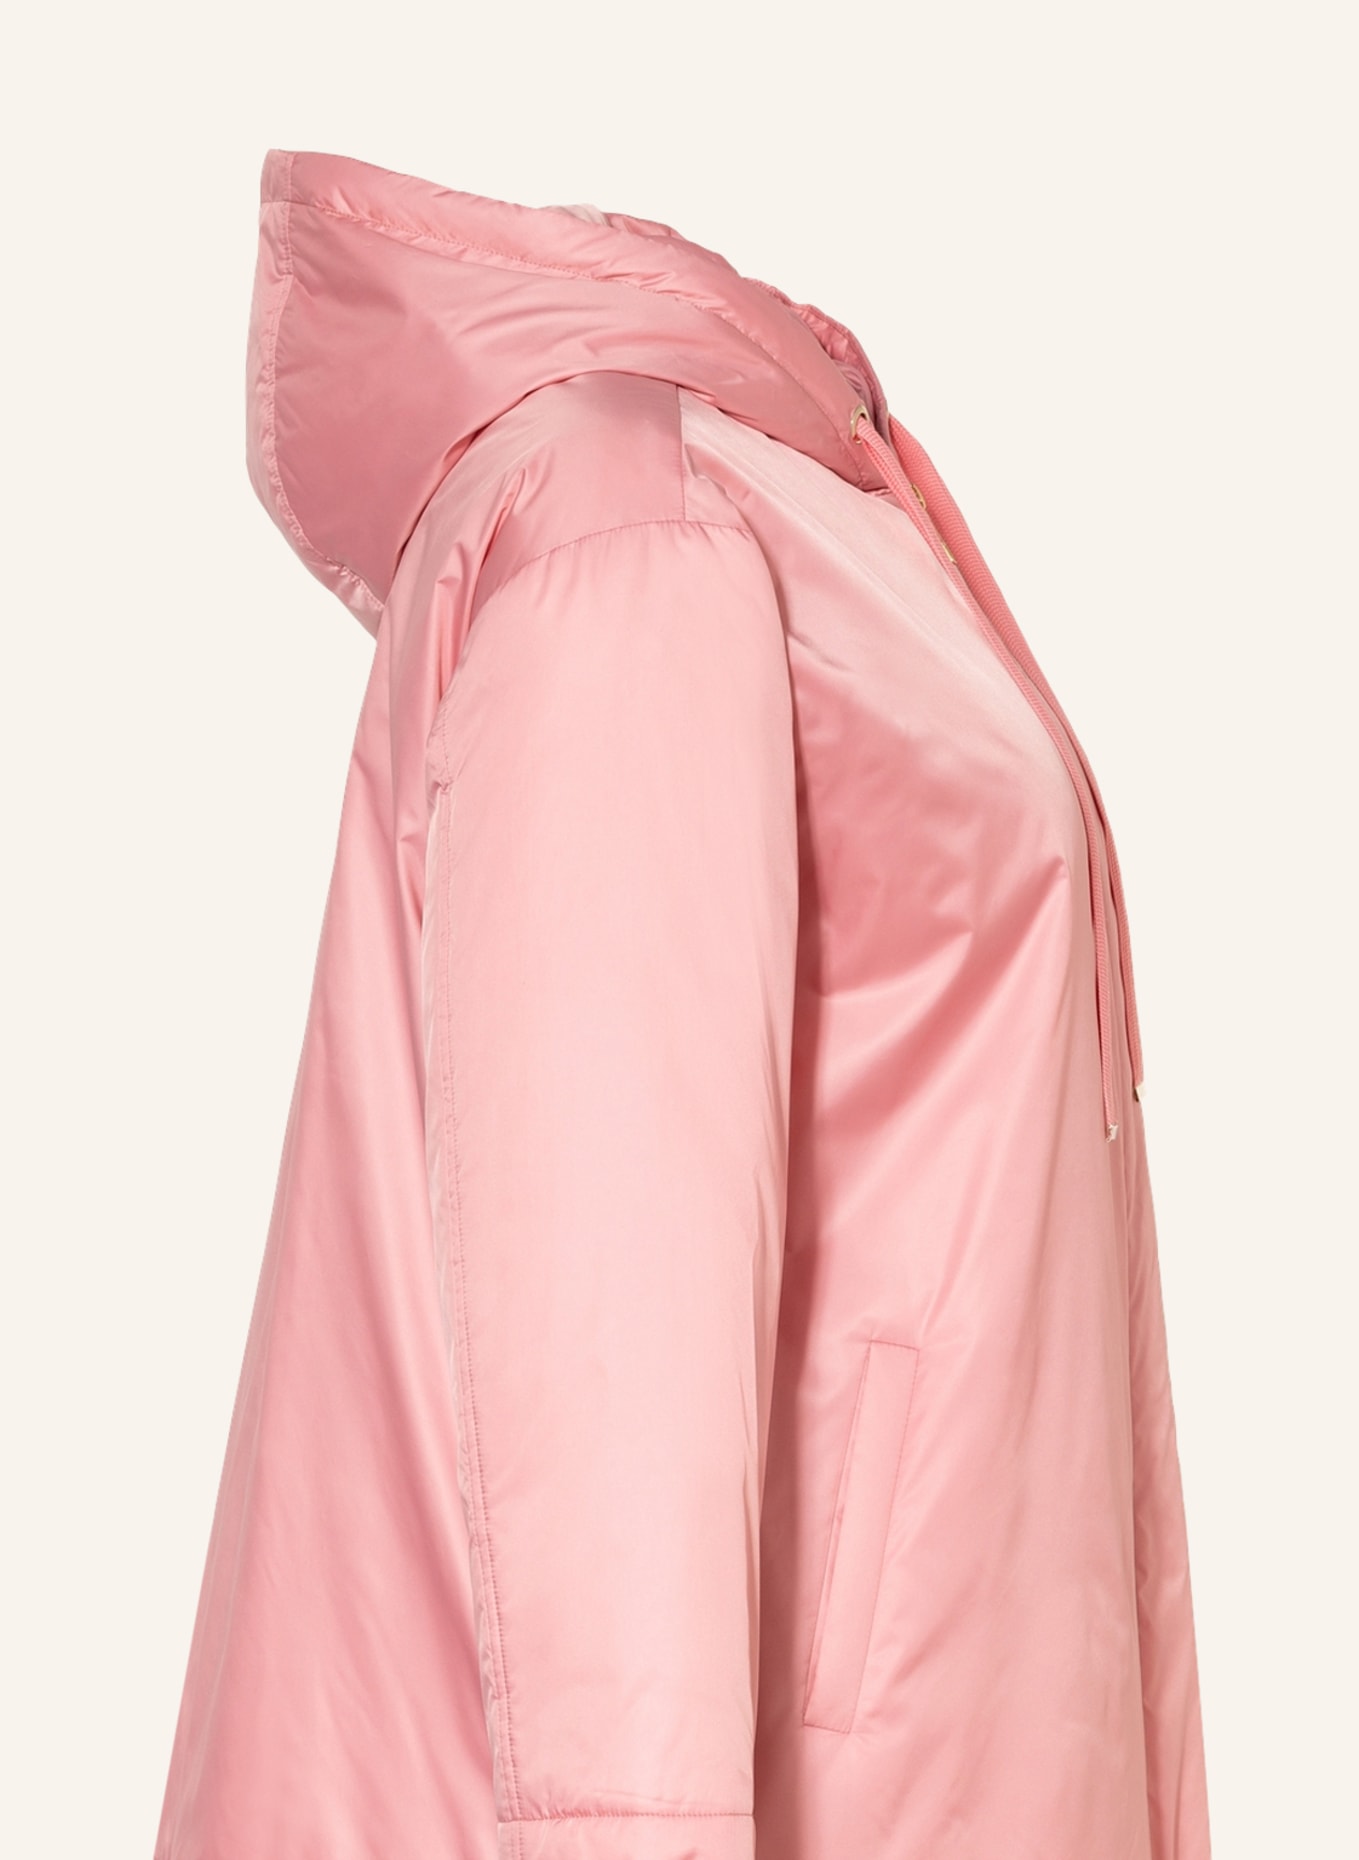 MARINA RINALDI SPORT Jacket in pink Breuninger